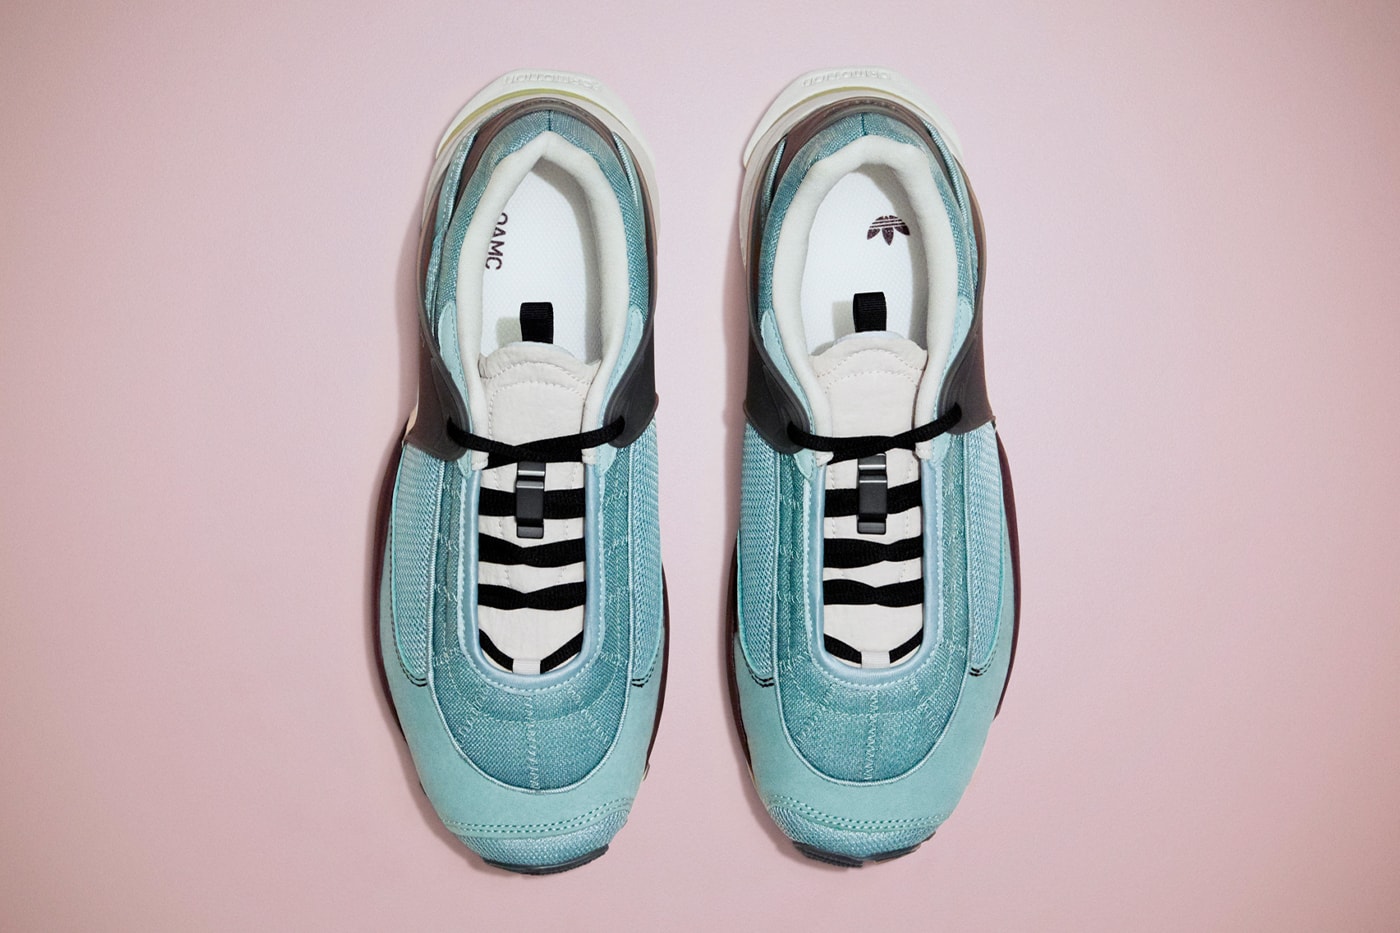 adidas Originals by OAMC Fall Winter 2020 collection menswear streetwear kicks shoes sneakers trainers runners footwear